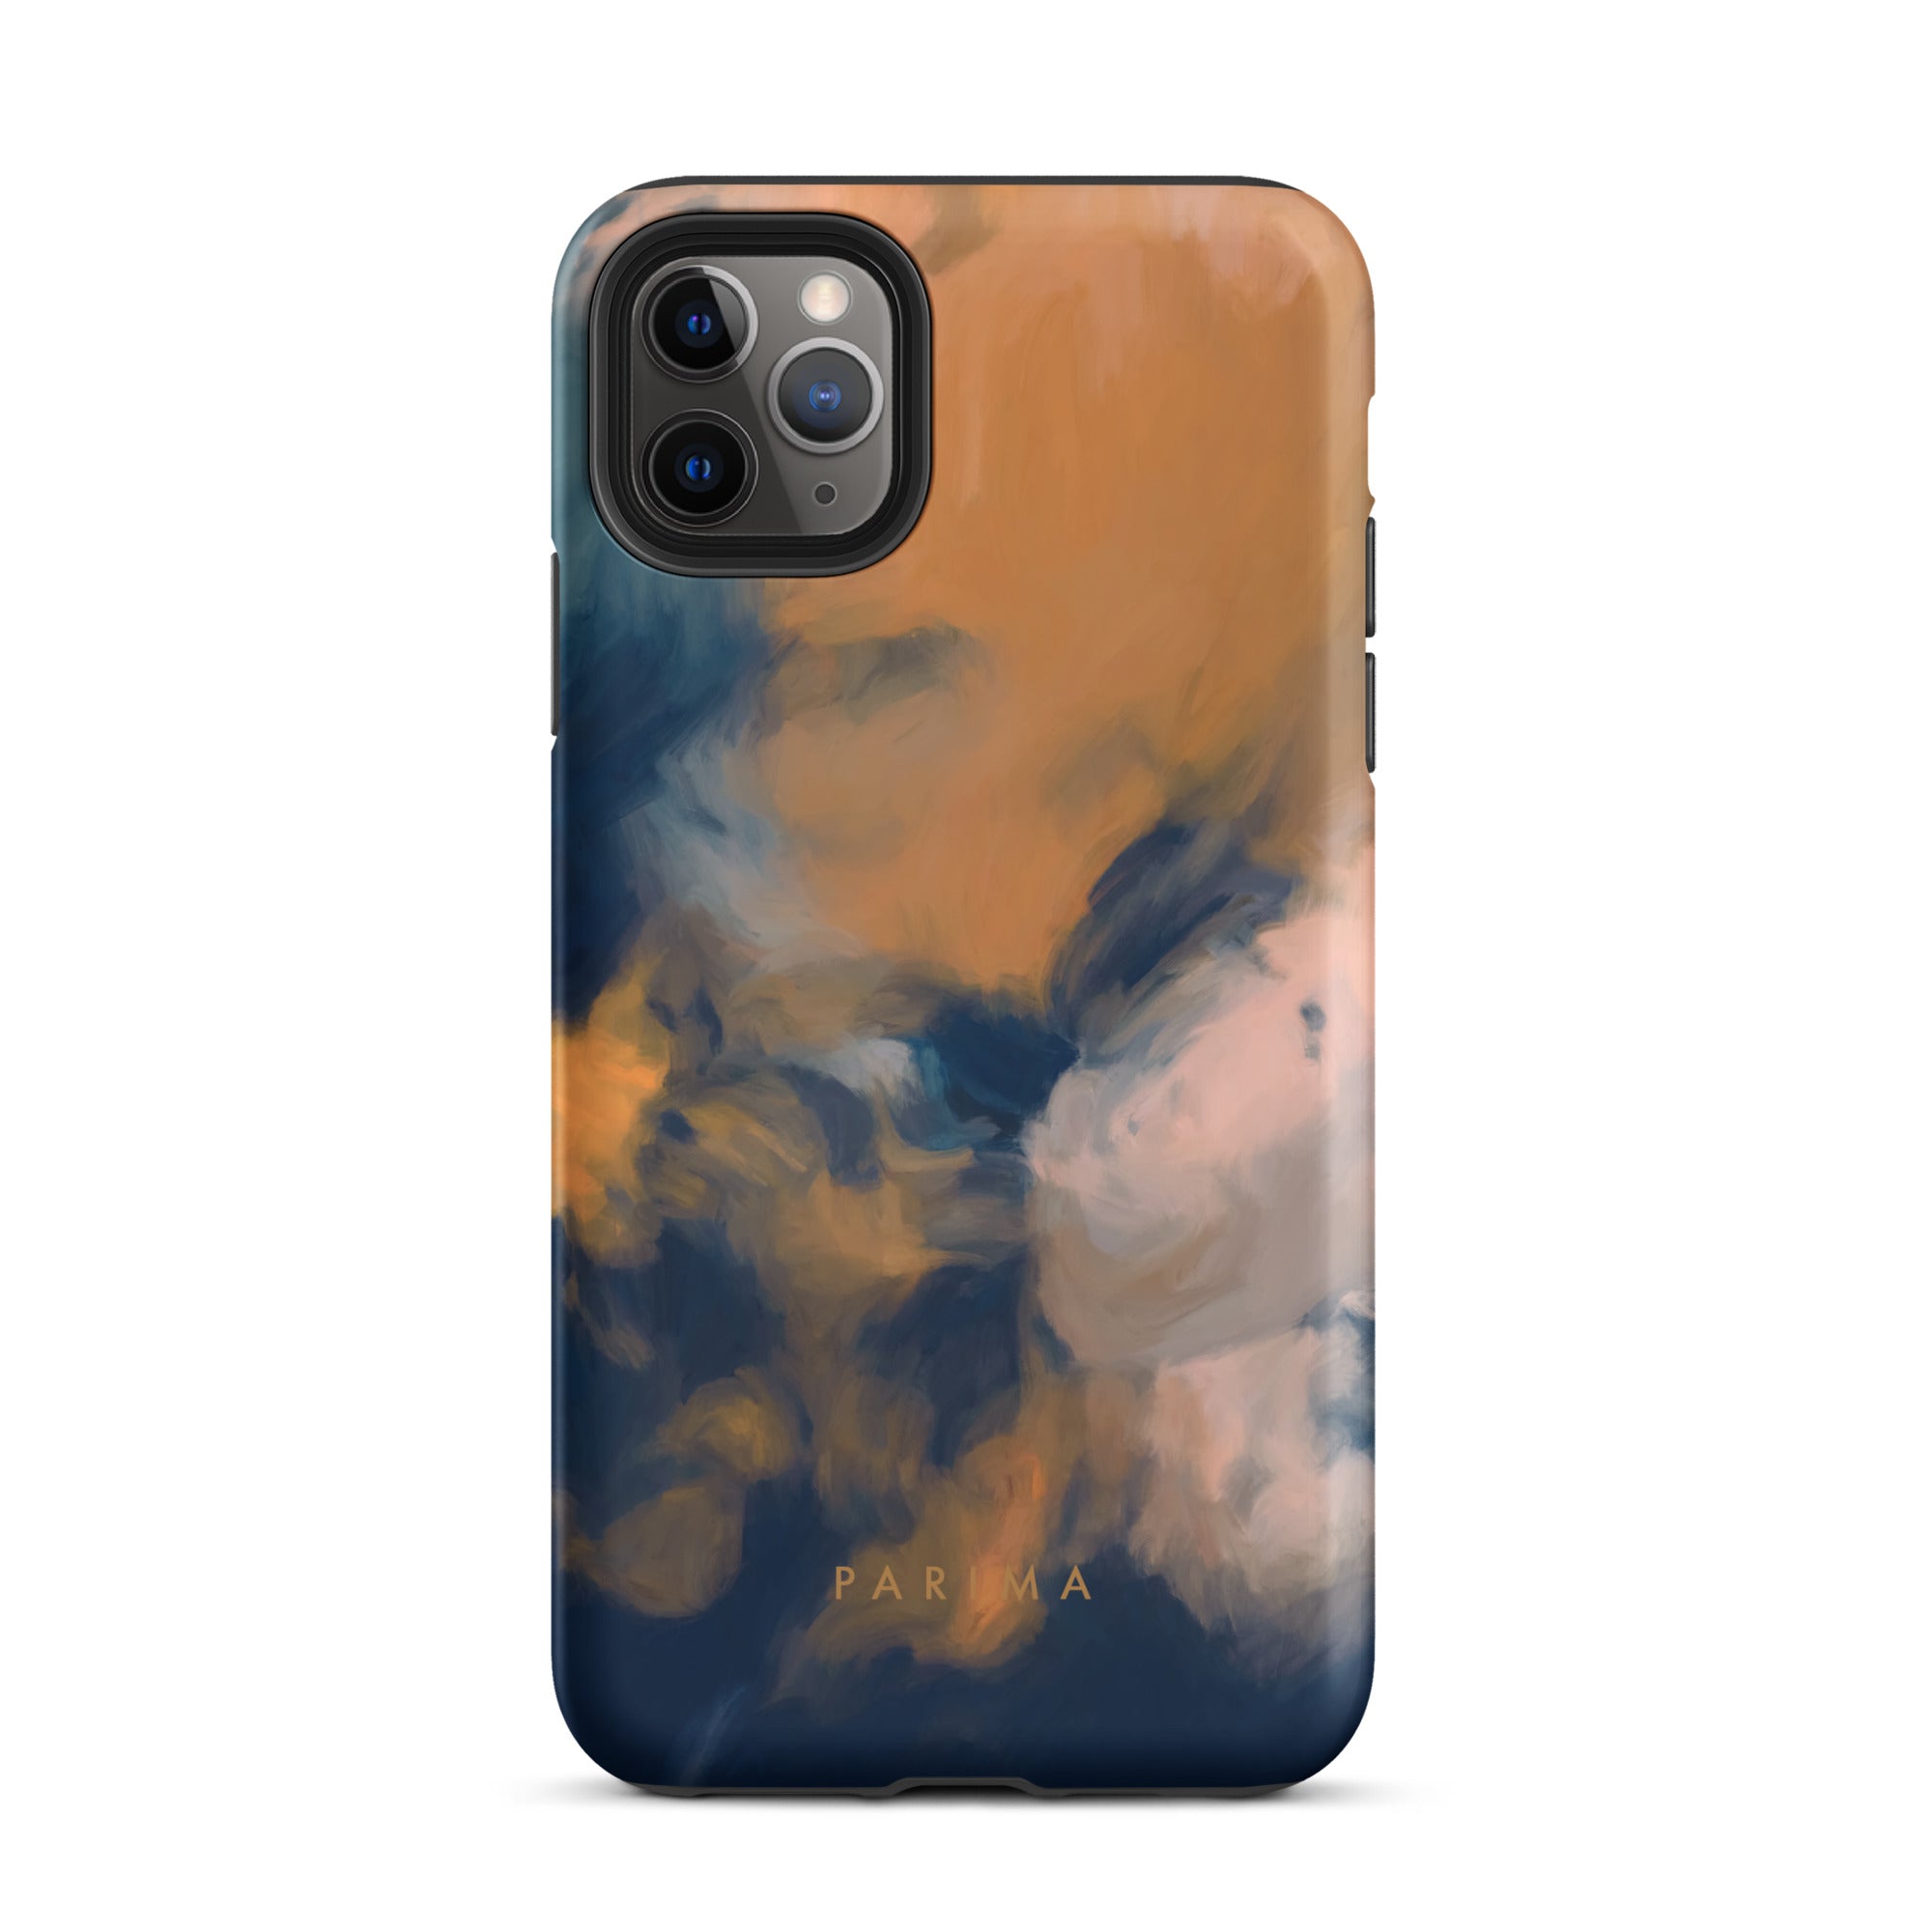 Mia Luna, blue and orange abstract art - iPhone 11 Pro Max tough case by Parima Studio